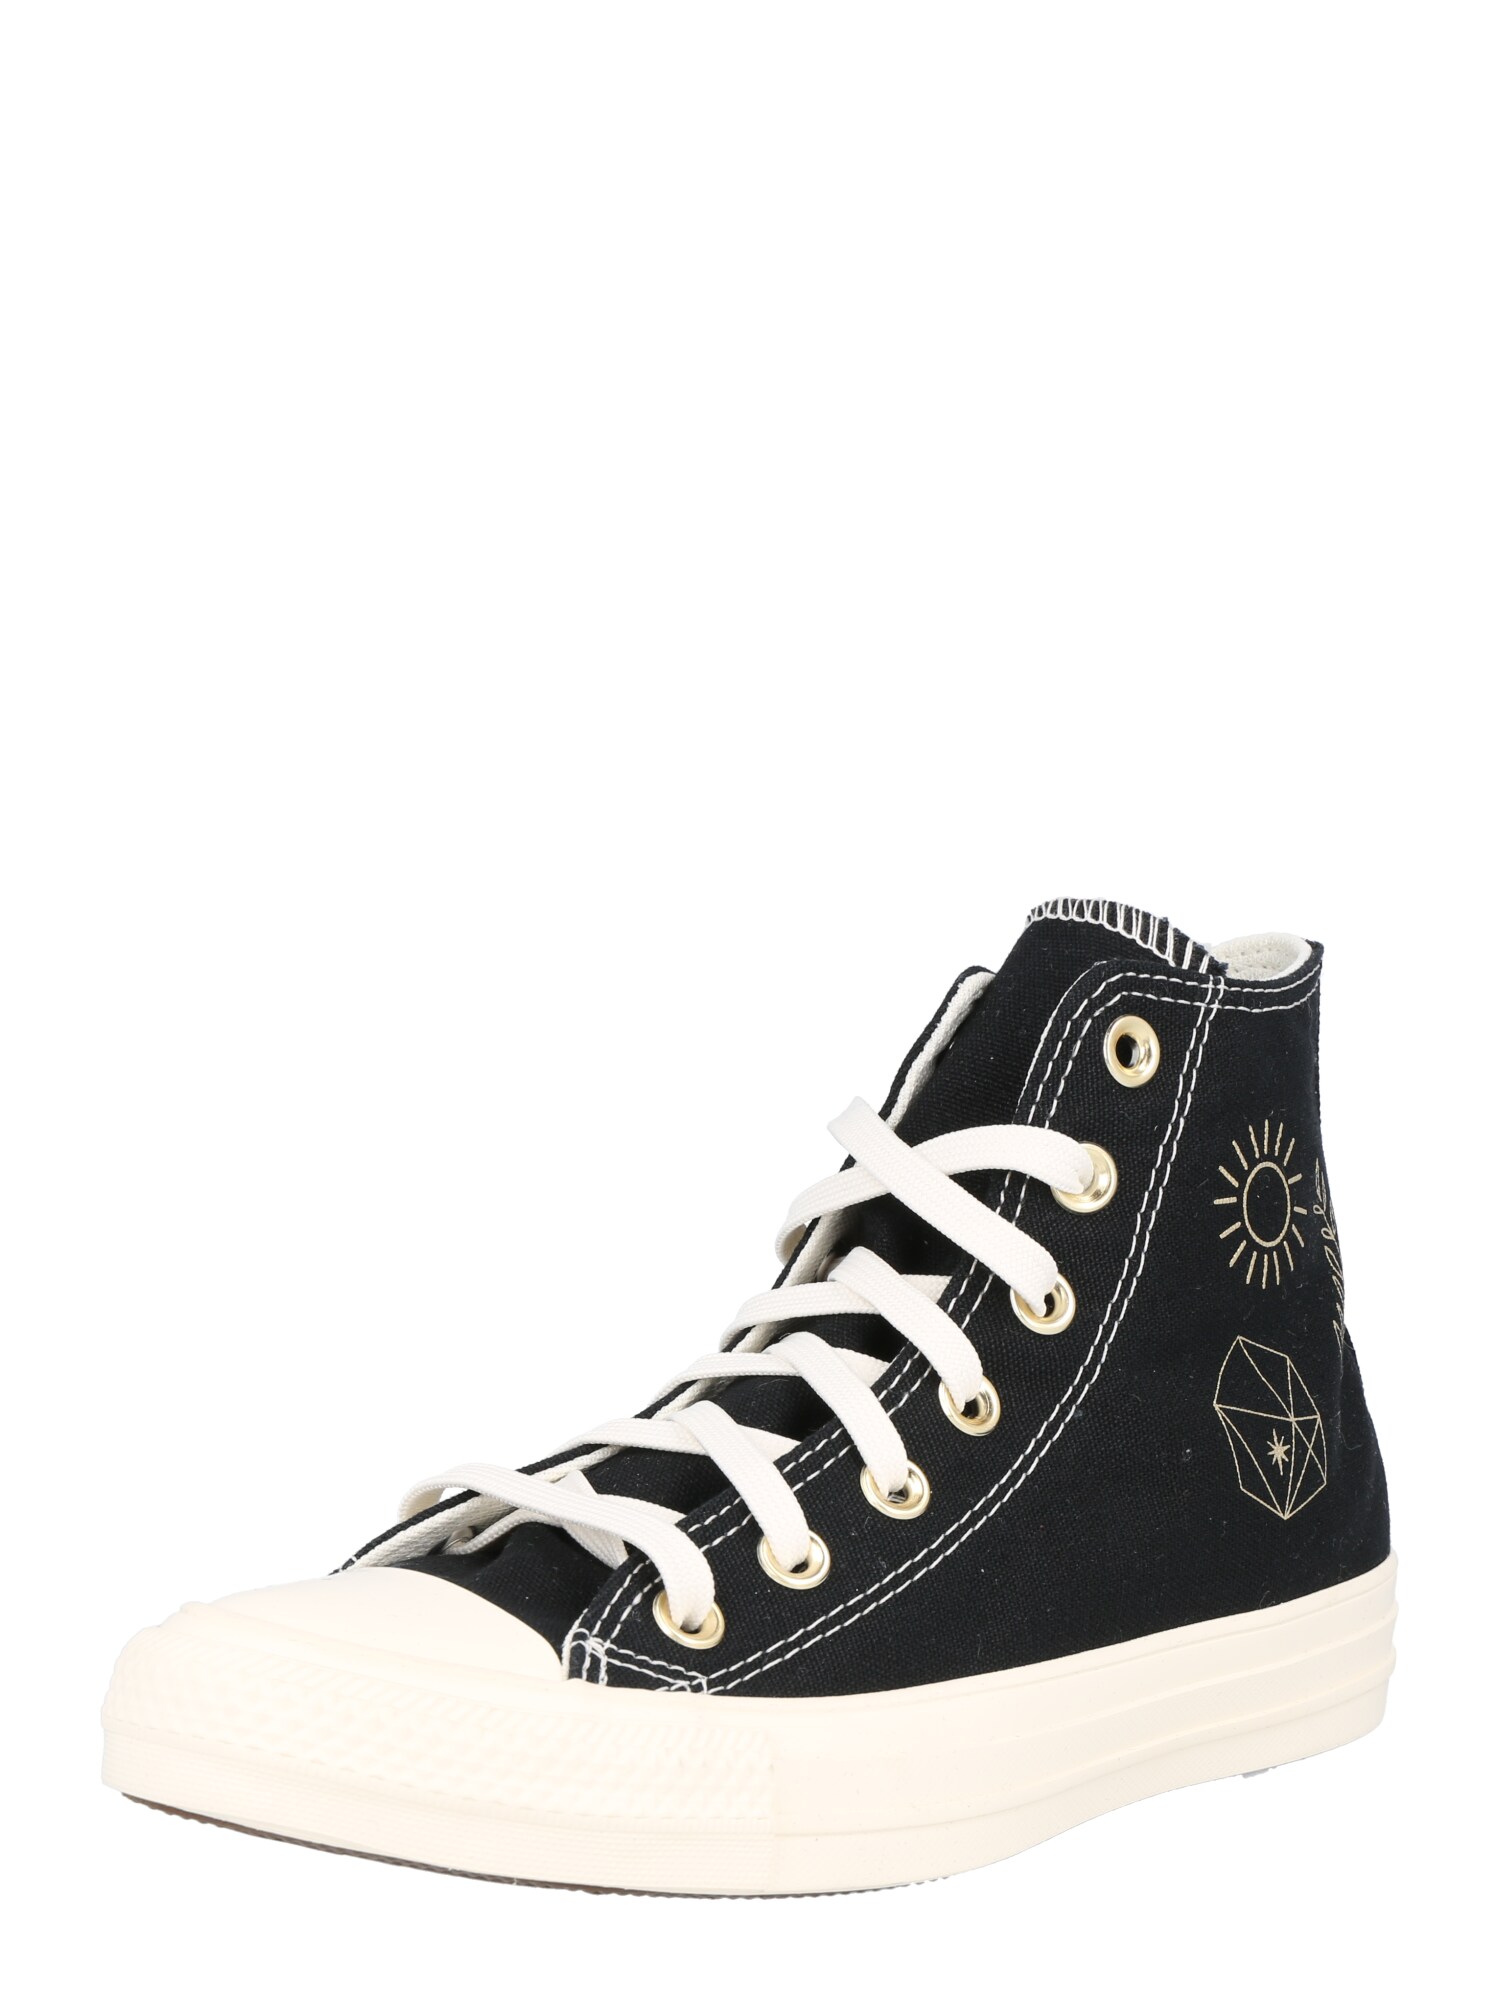 Converse CONVERSE Sneaker 'Chuck Taylor All Star' beige / schwarz / weiß